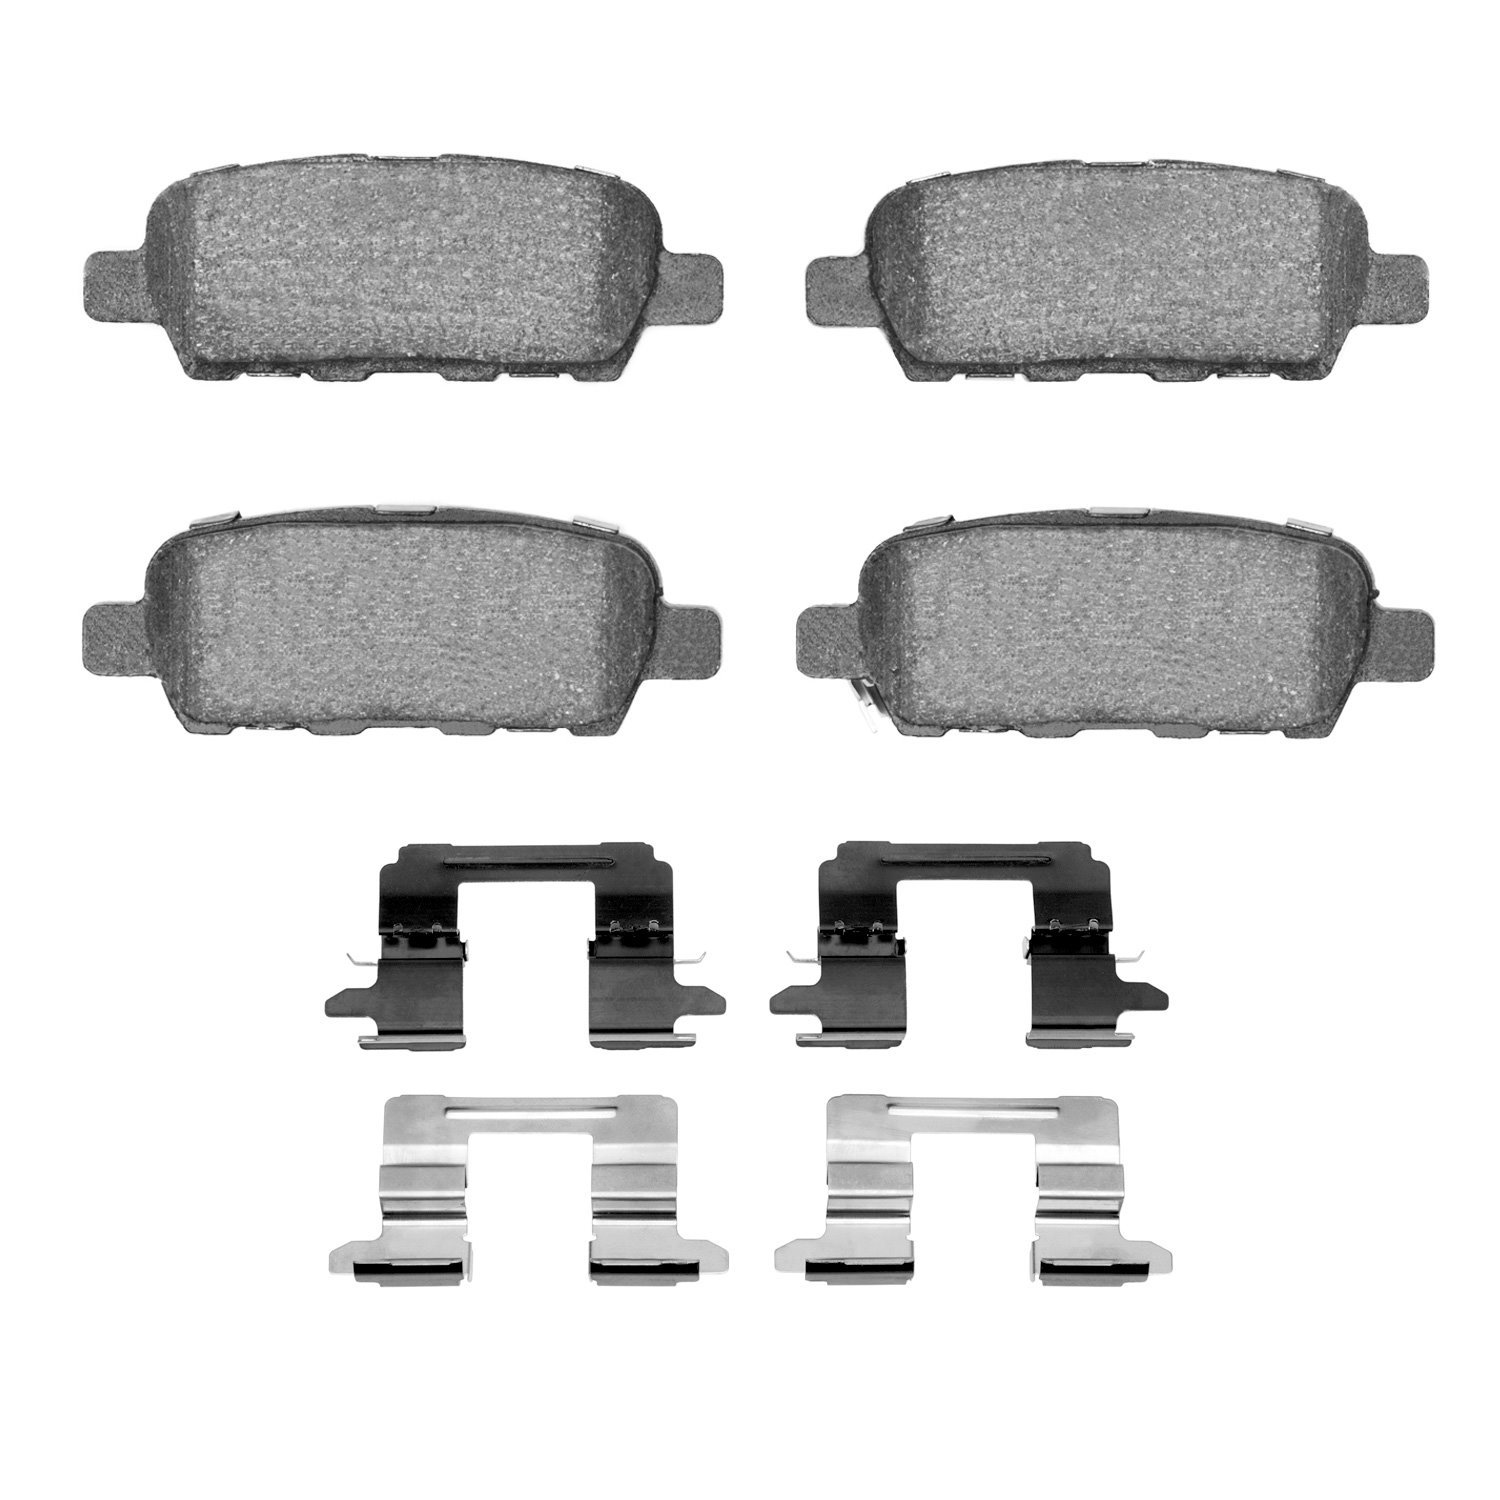 1311-0905-03 3000-Series Semi-Metallic Brake Pads & Hardware Kit, Fits Select Multiple Makes/Models, Position: Rear